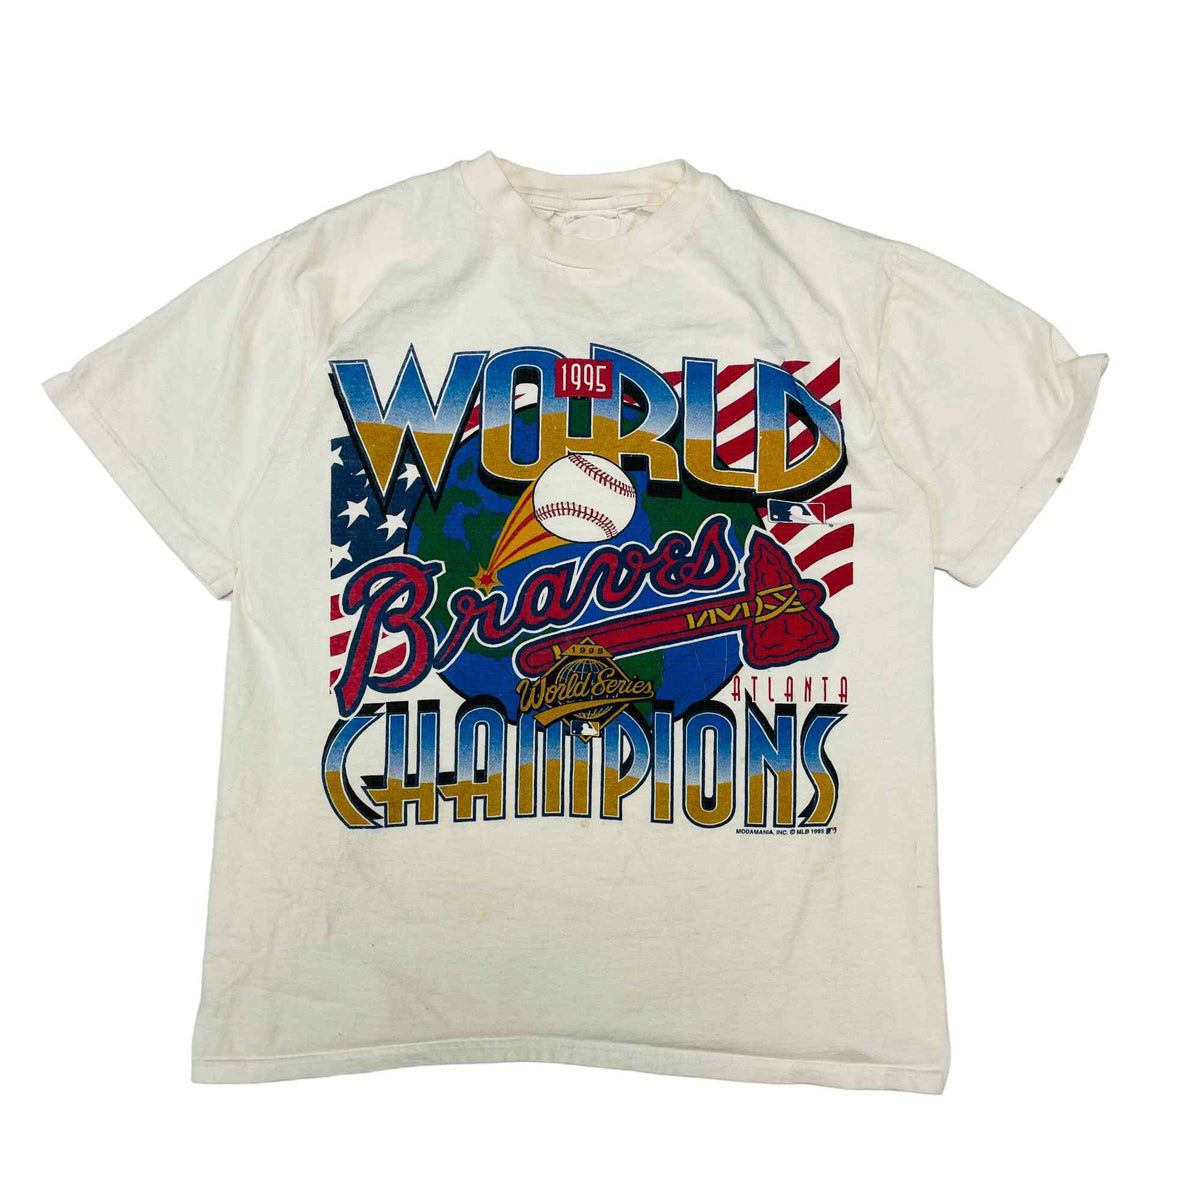 Atlanta Braves 26 Years 1995-2021 World Series Champions Shirt